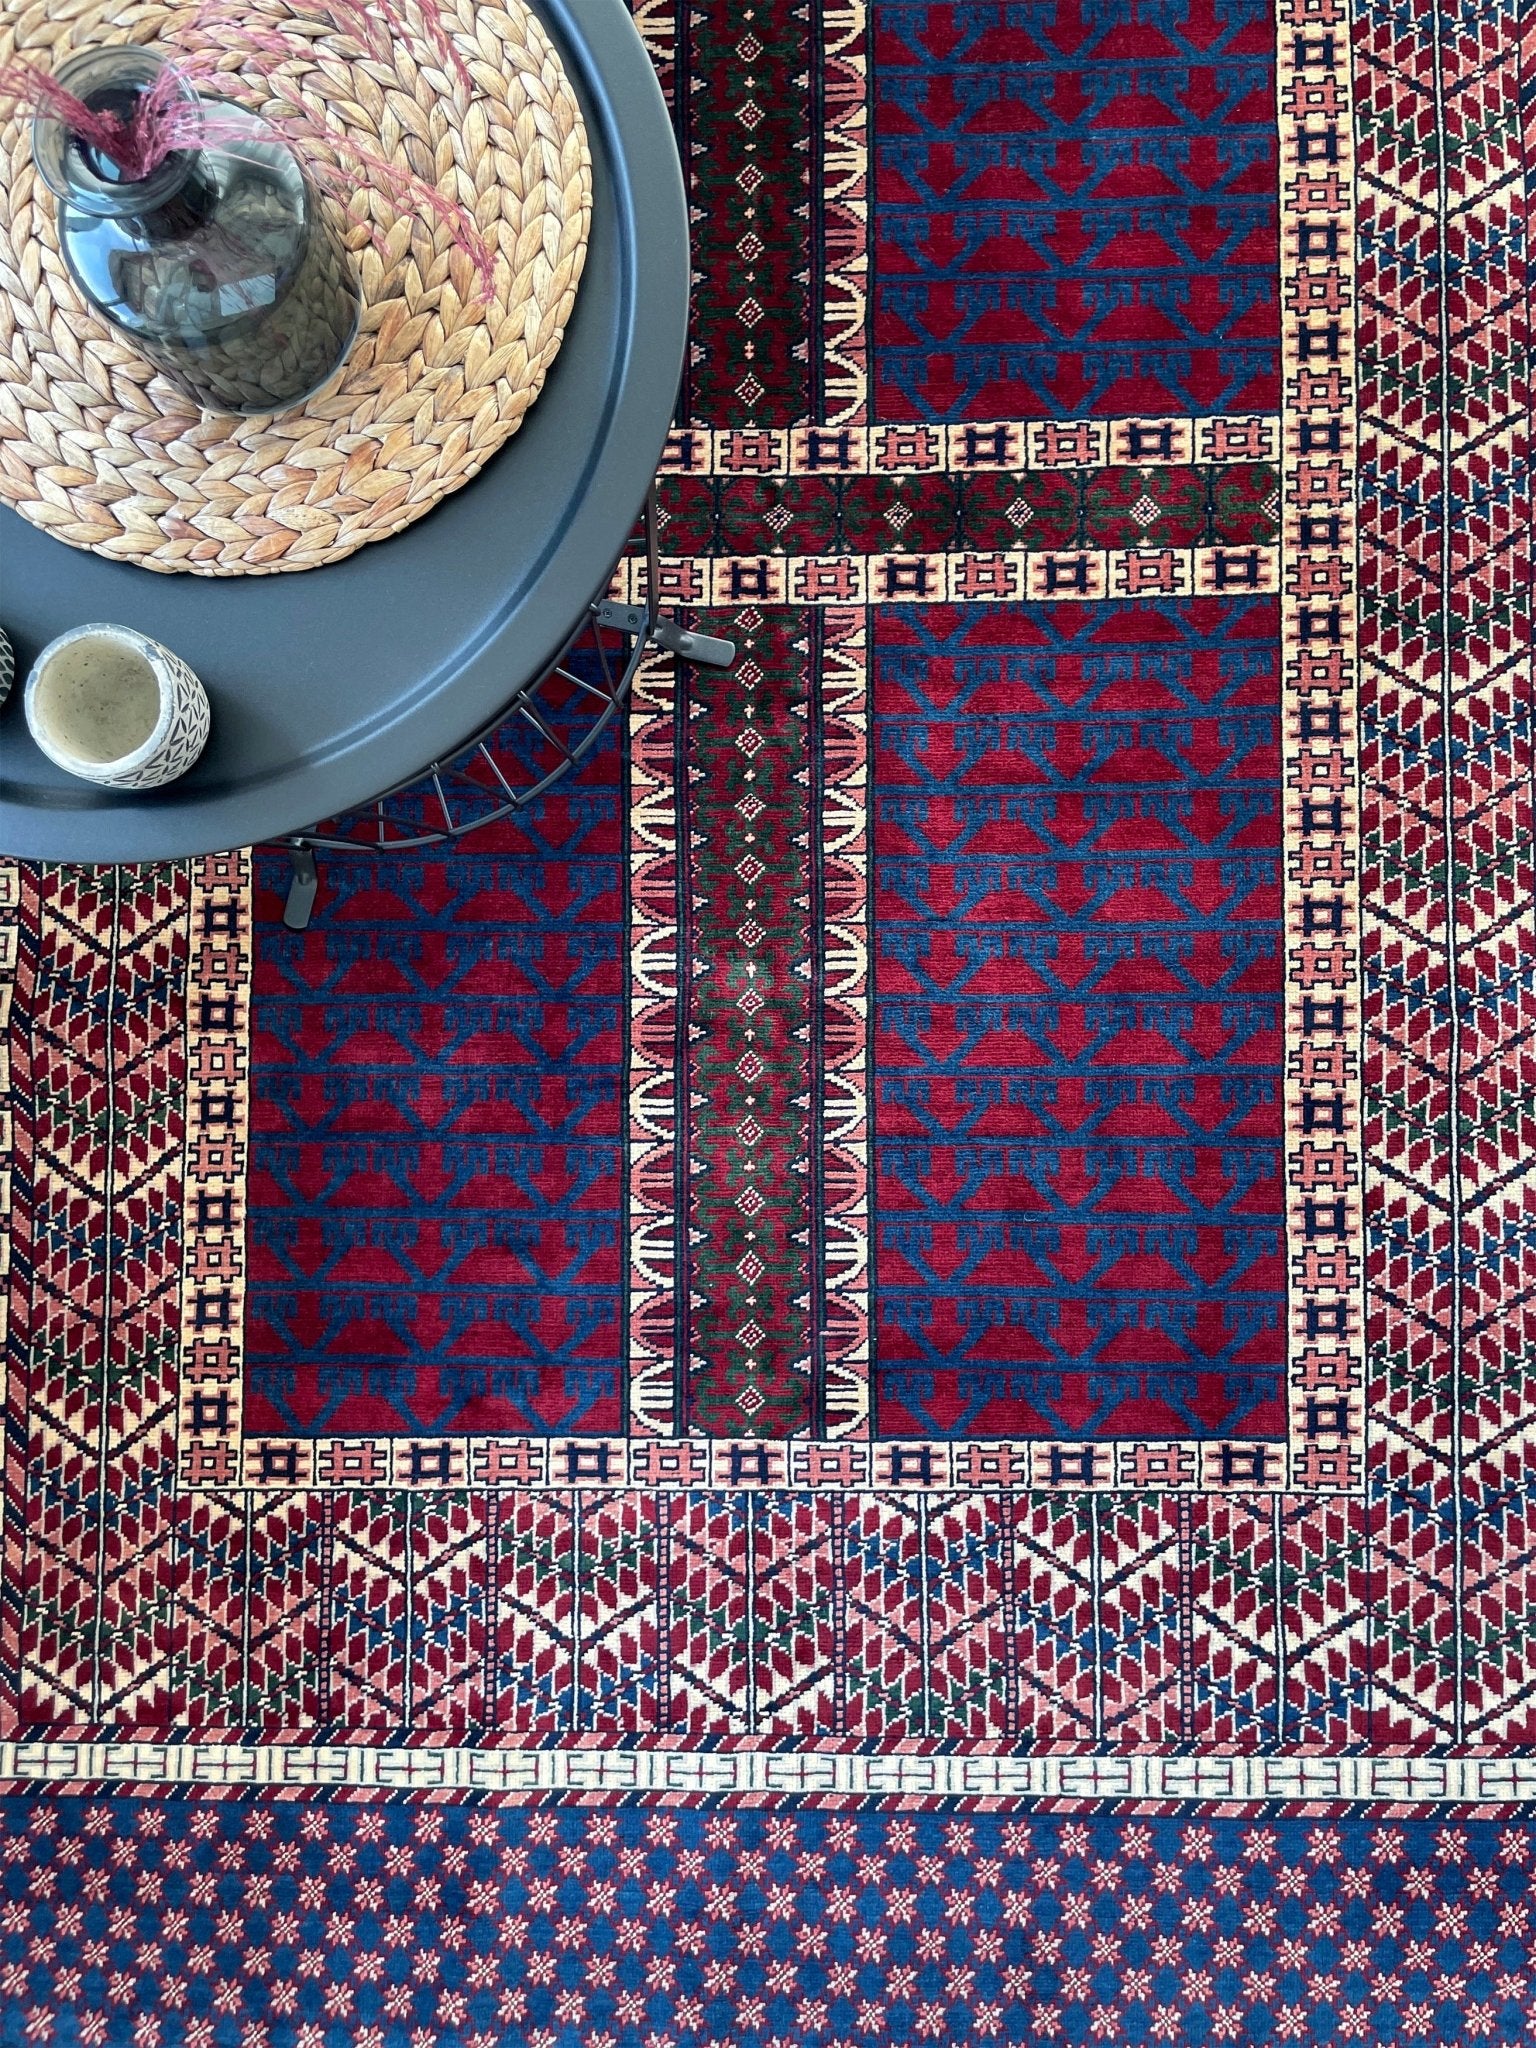 Turkmen Ensi rug. Oriental rug shop san francisco bay area palo alto berkeler.